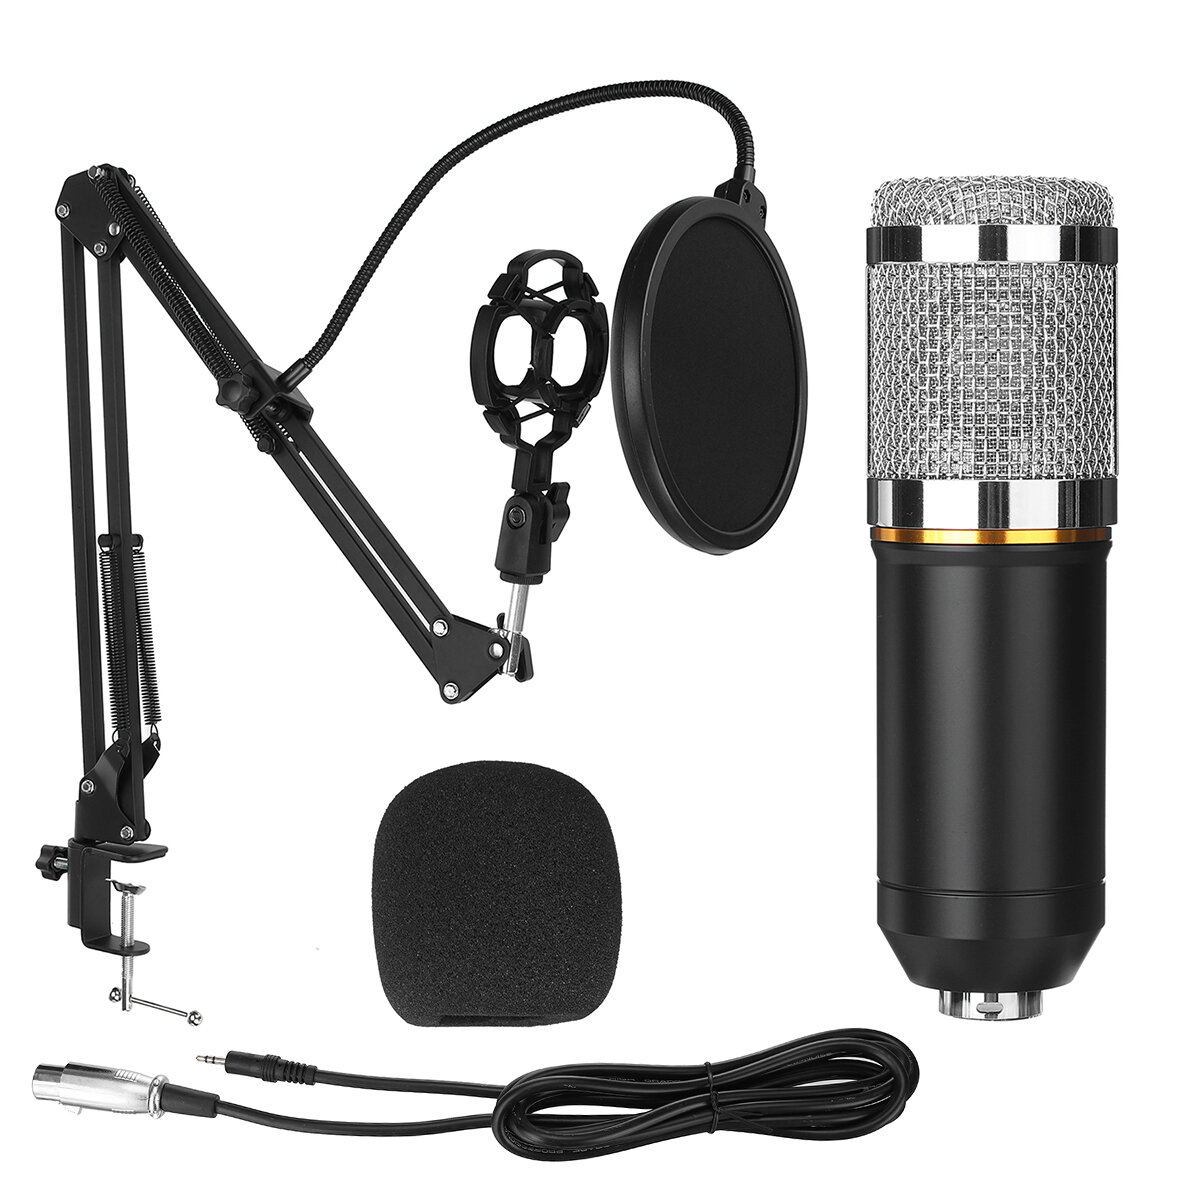 

Professional BM-800 Condenser Dynamic Microphone Mic Sound Audio Studio Recording with Shock Mount